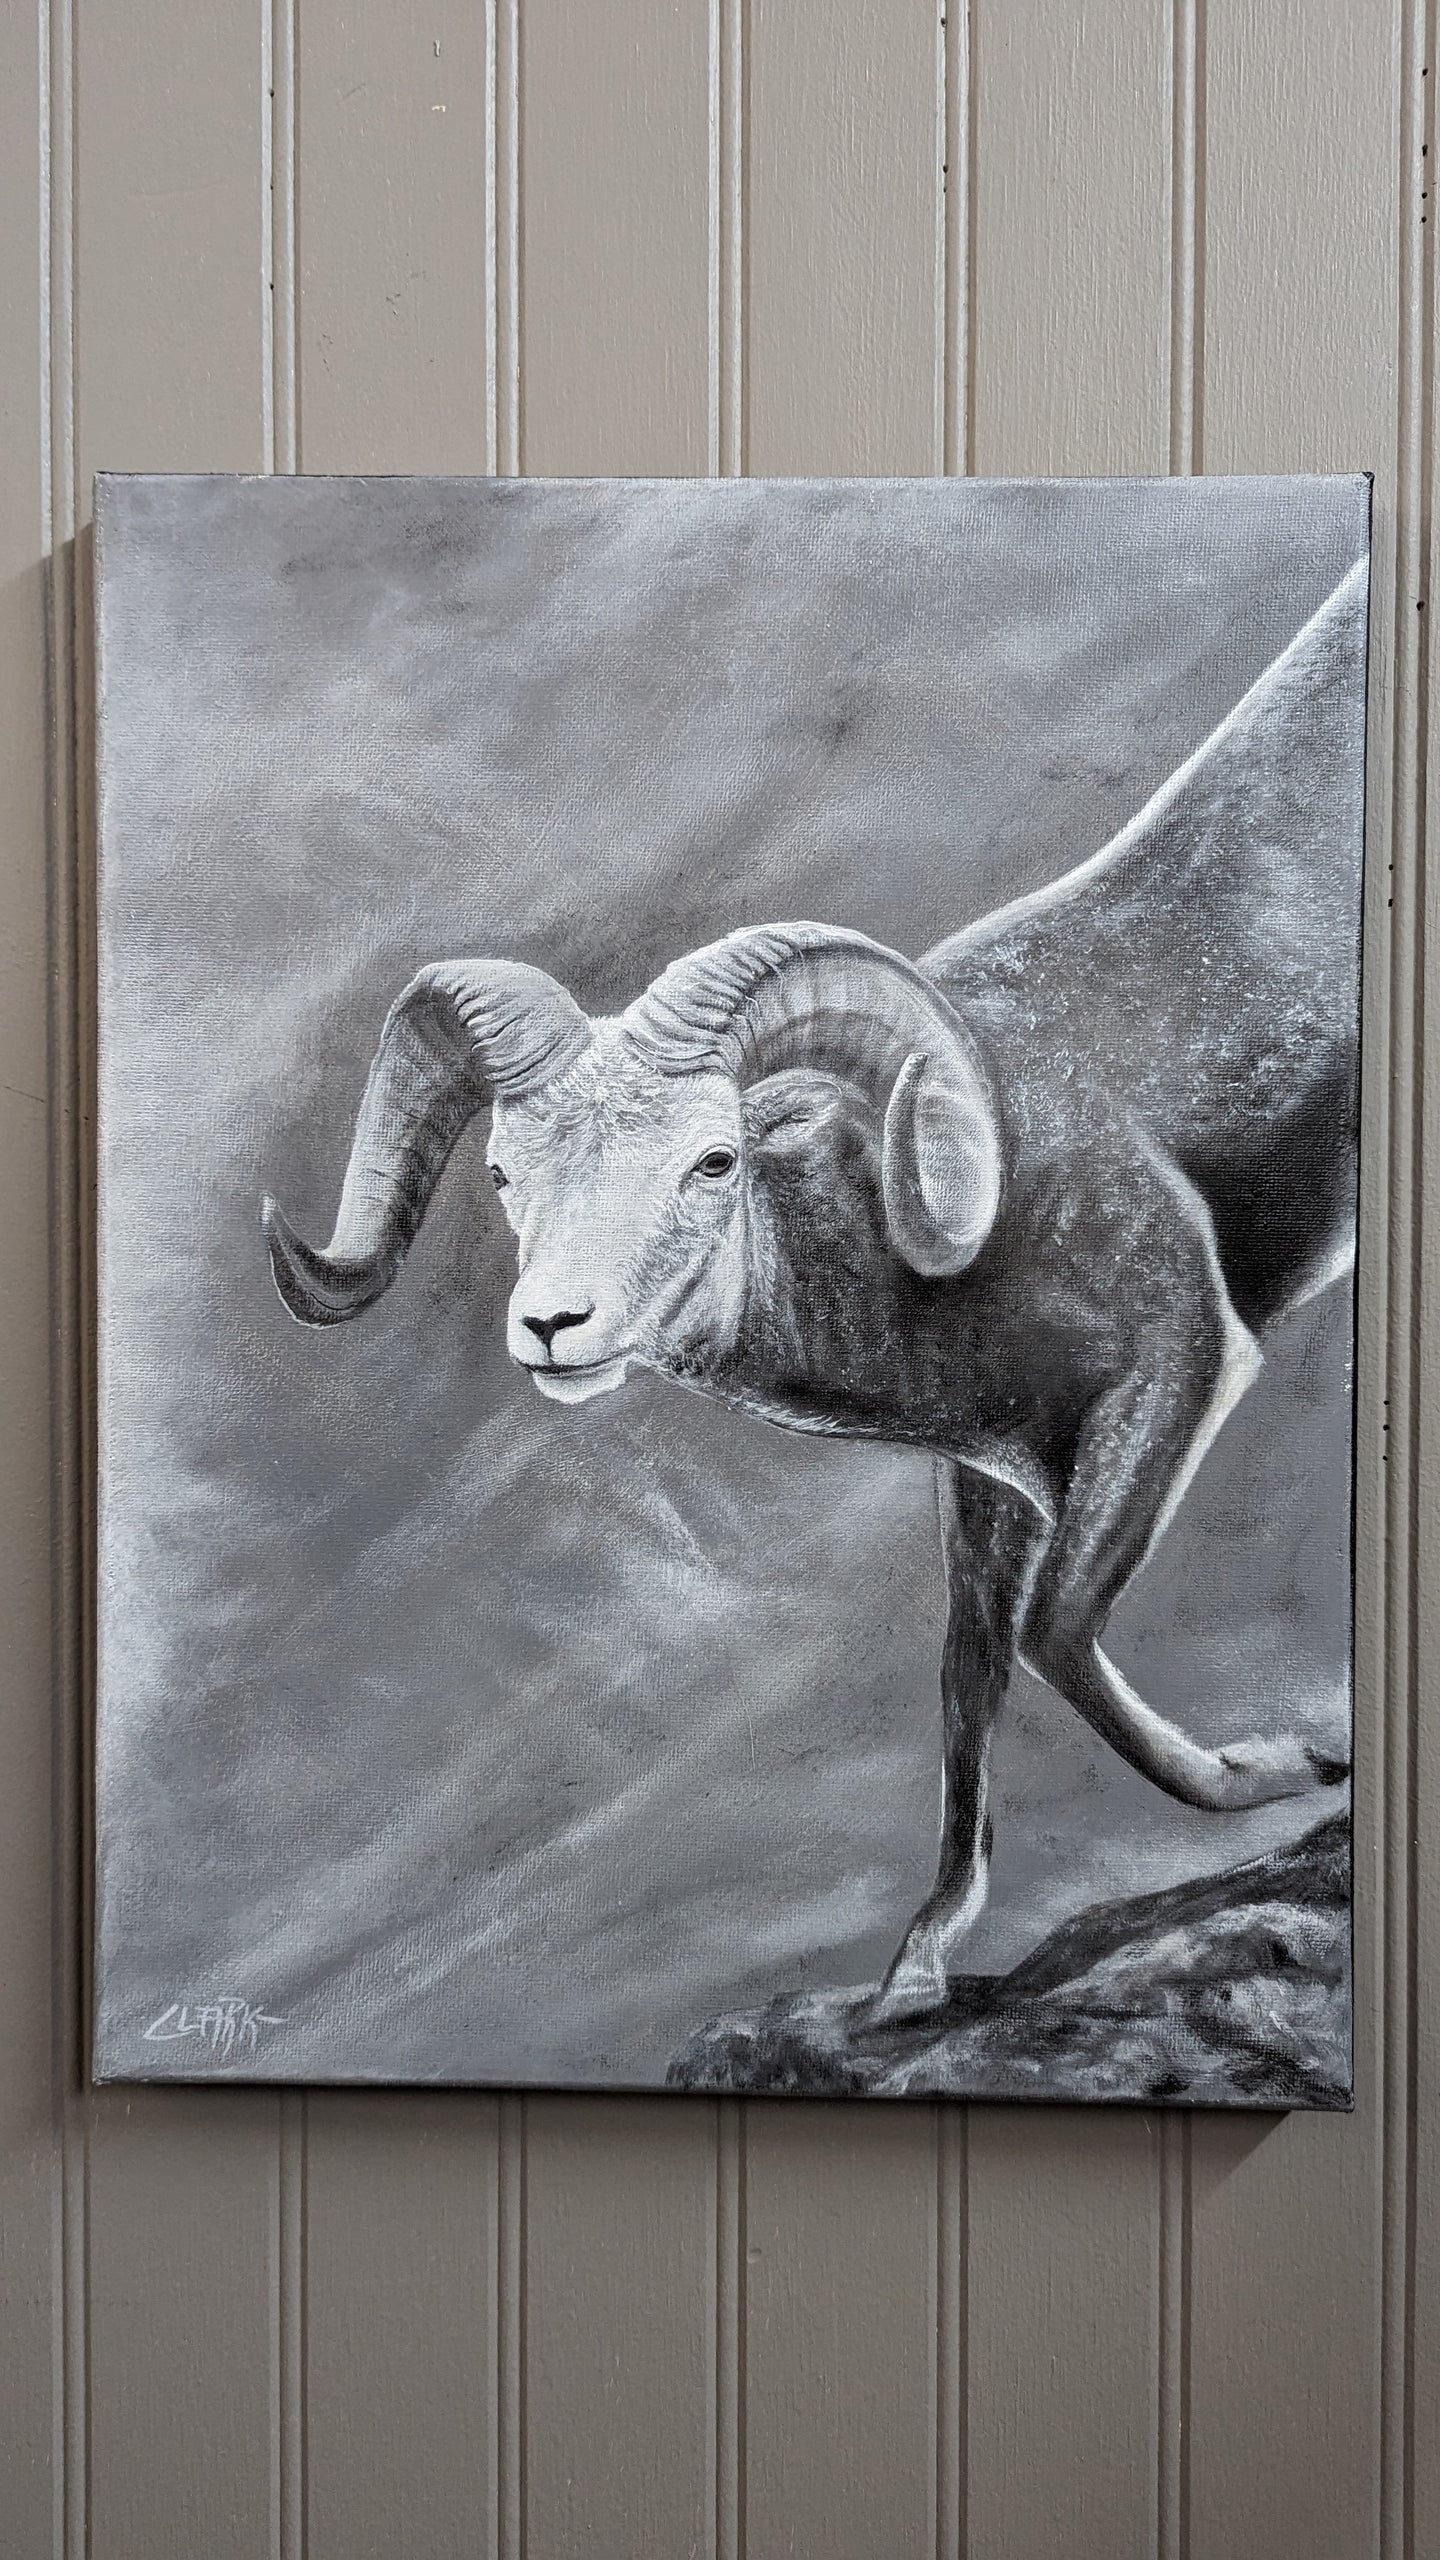 King Of The Ridge Stone Sheep (11x14) Original Acrylic Painting